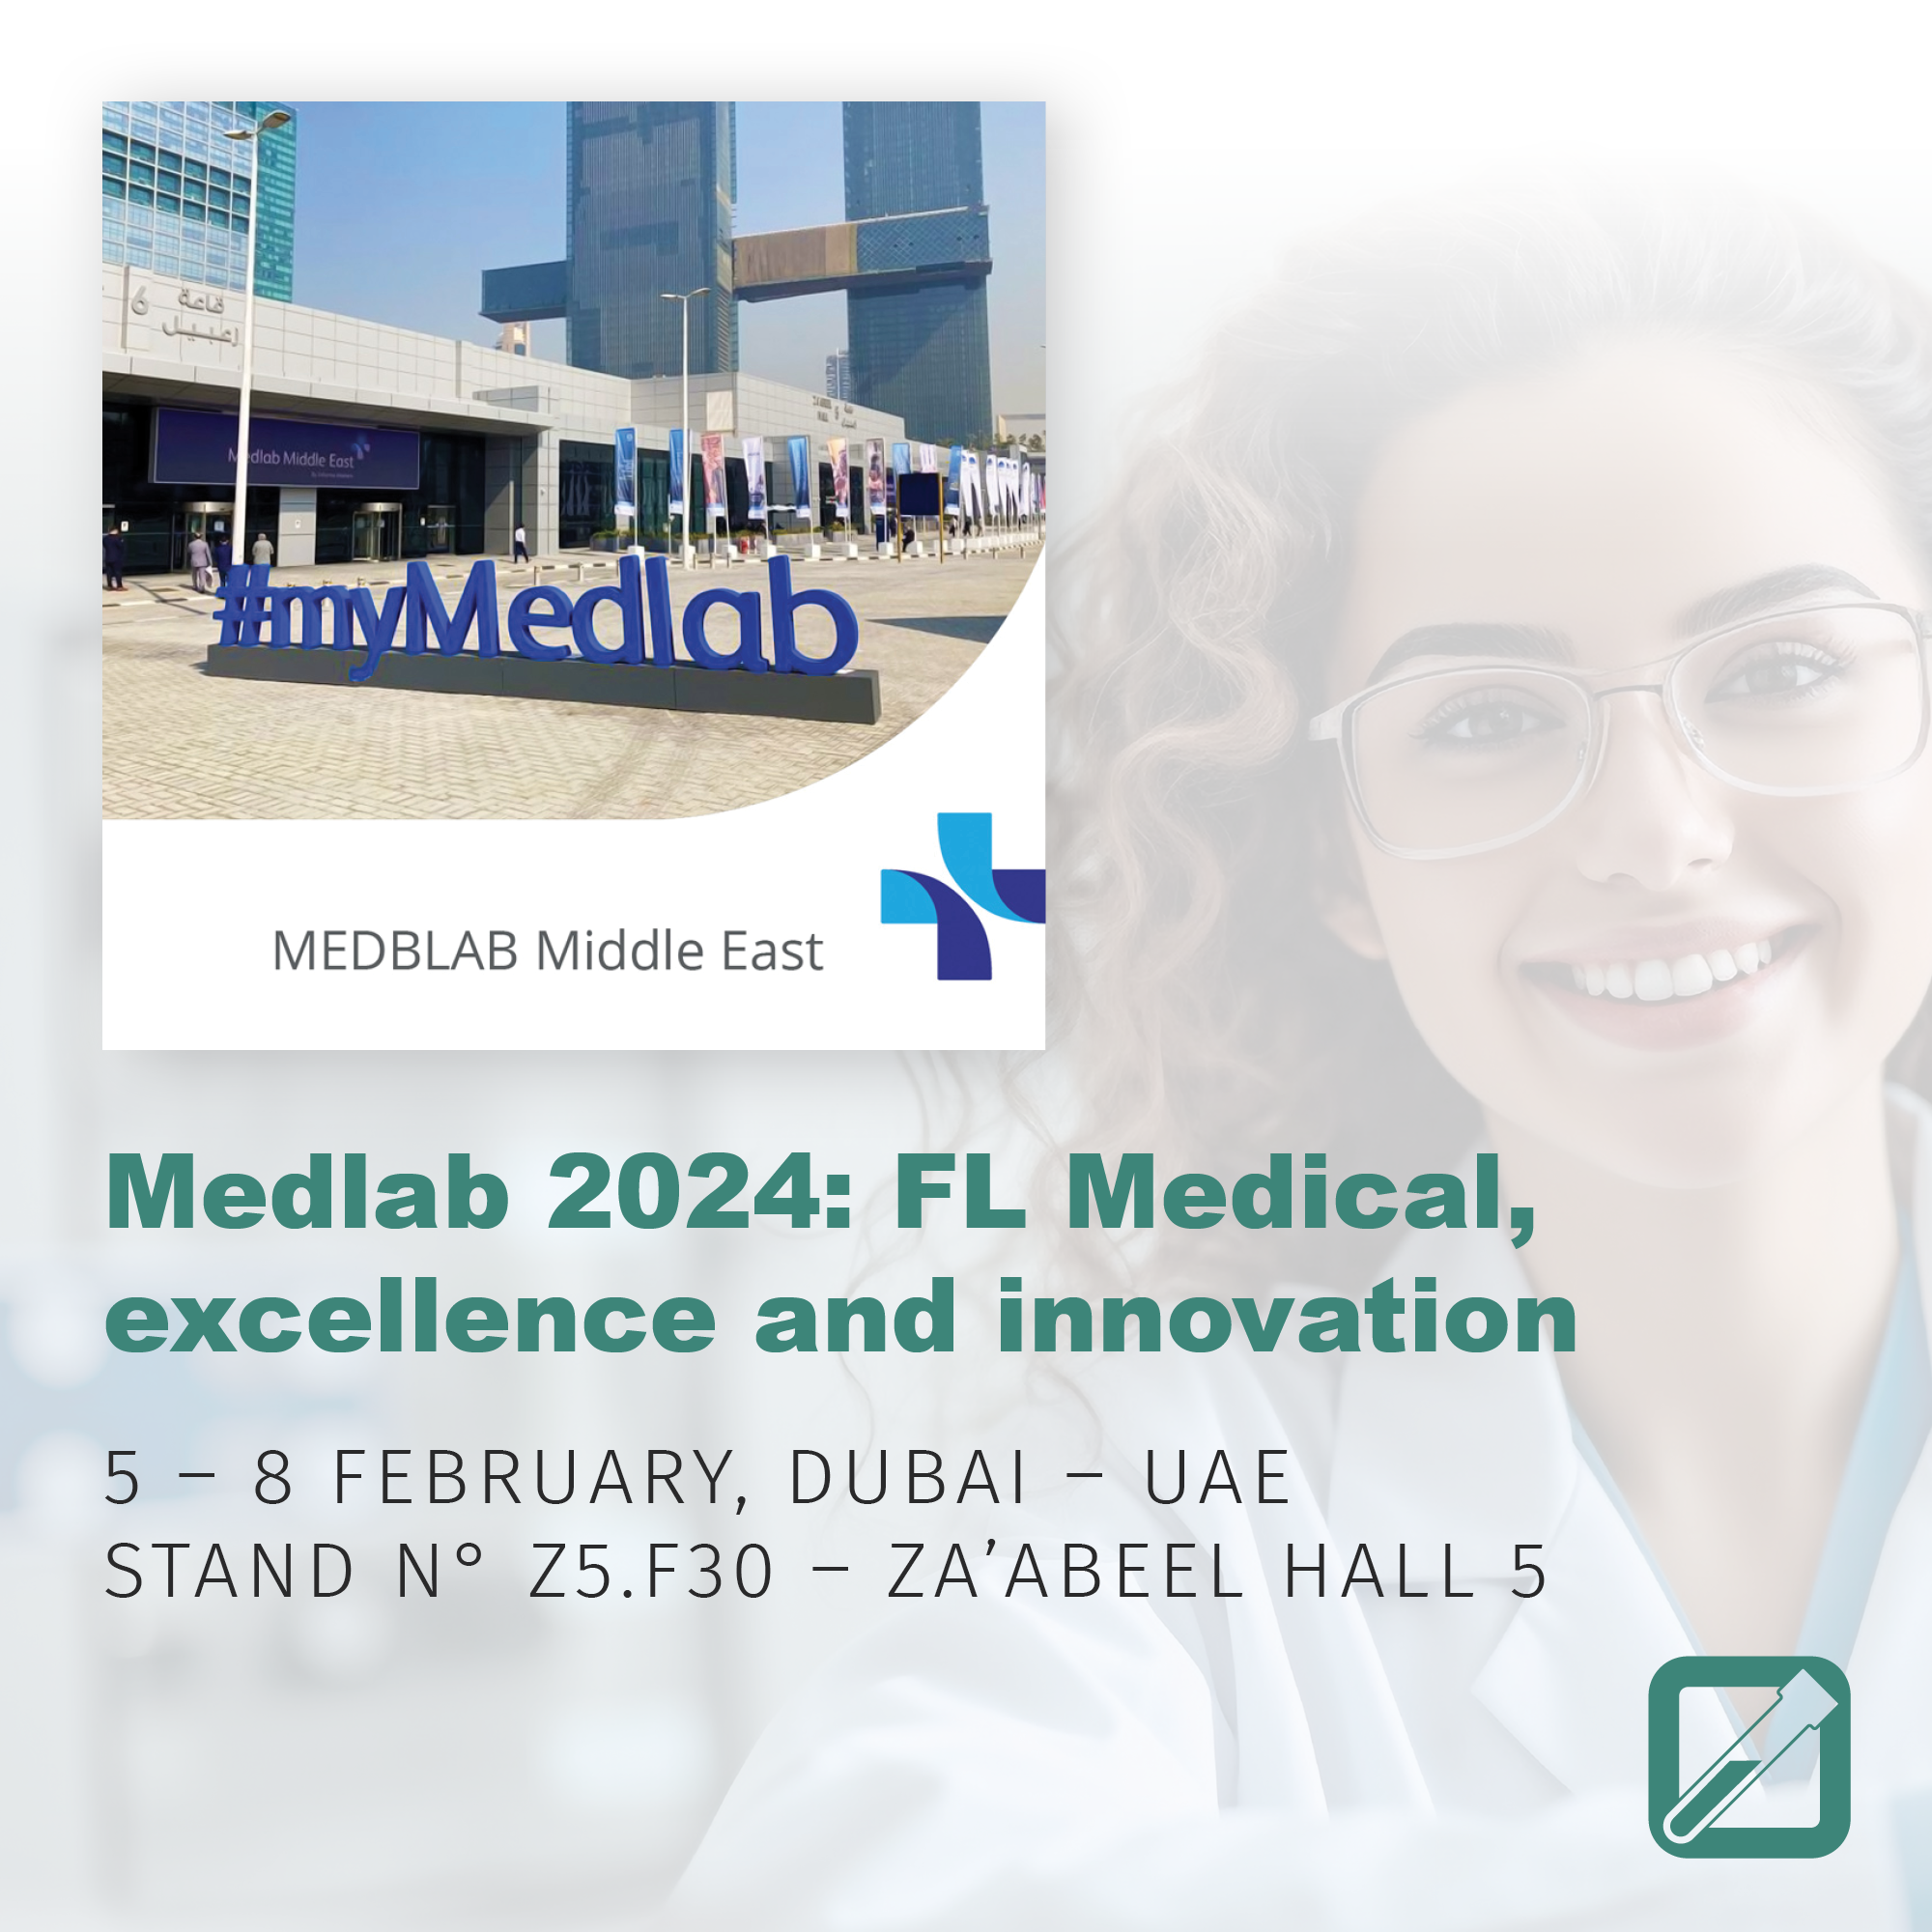 Medlab 2024: FL Medical, excellence and innovation